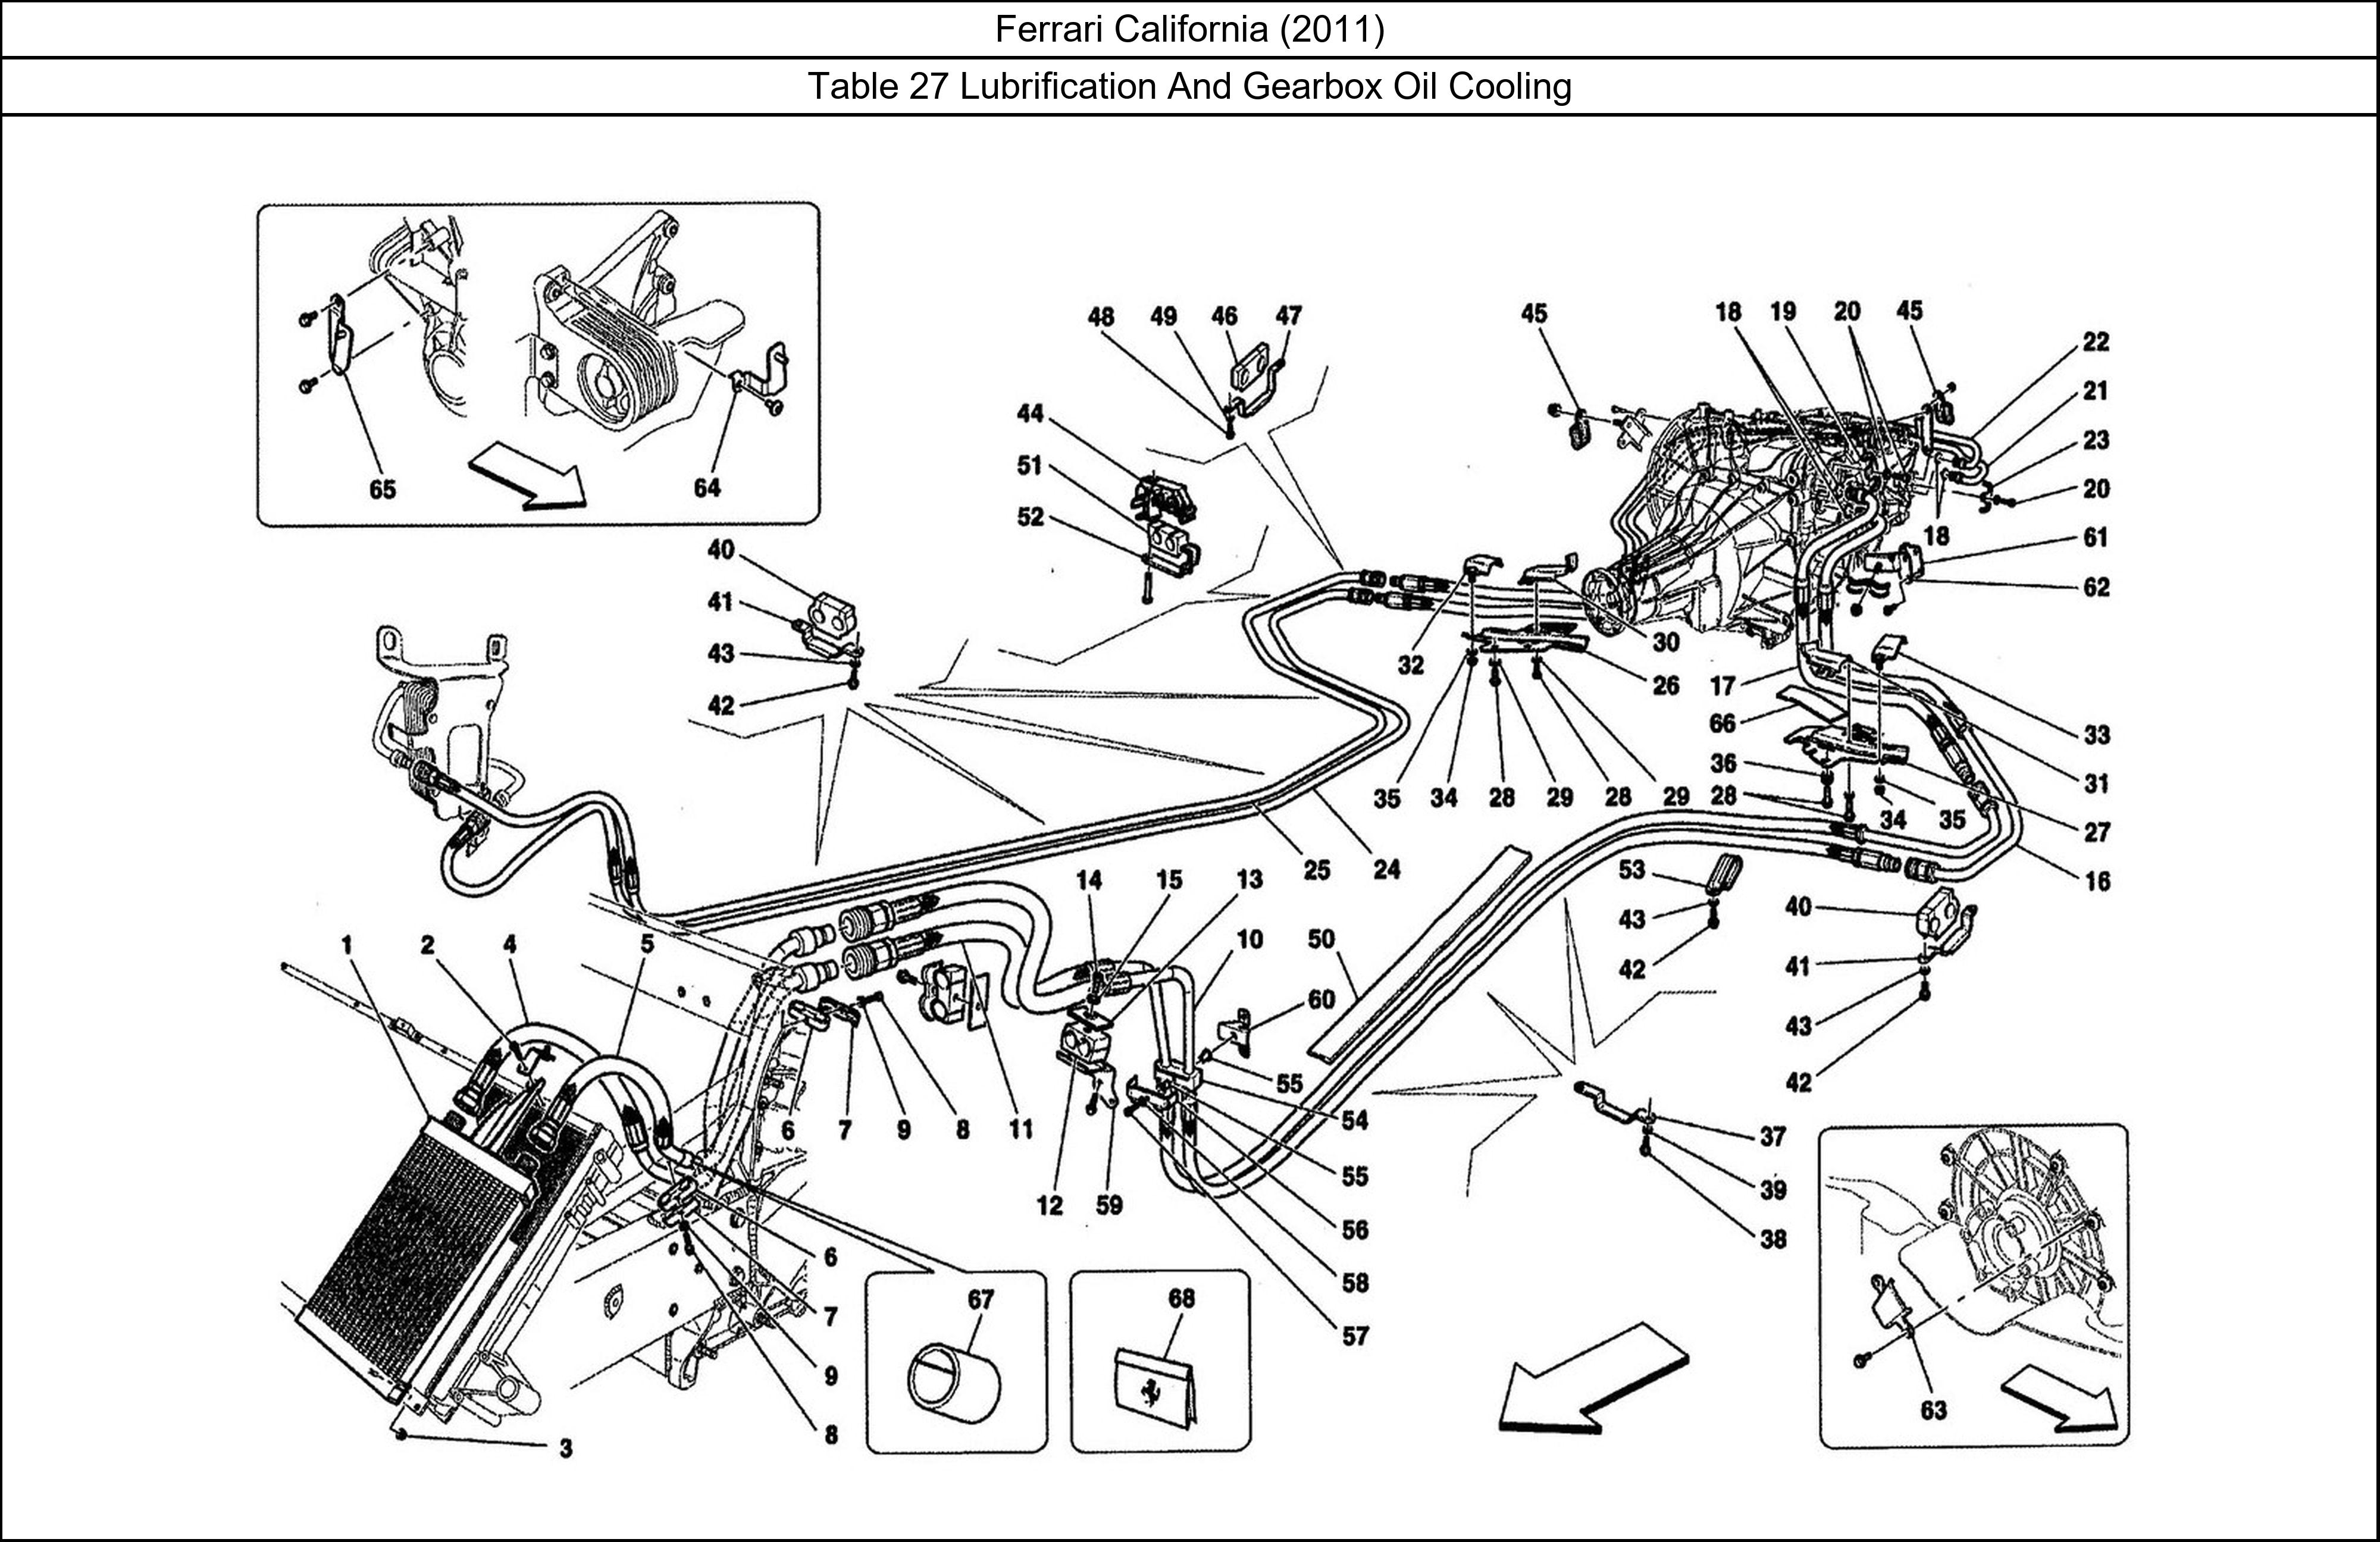 Ferrari Parts Ferrari California (2011) Table 27 Lubrification And Gearbox Oil Cooling